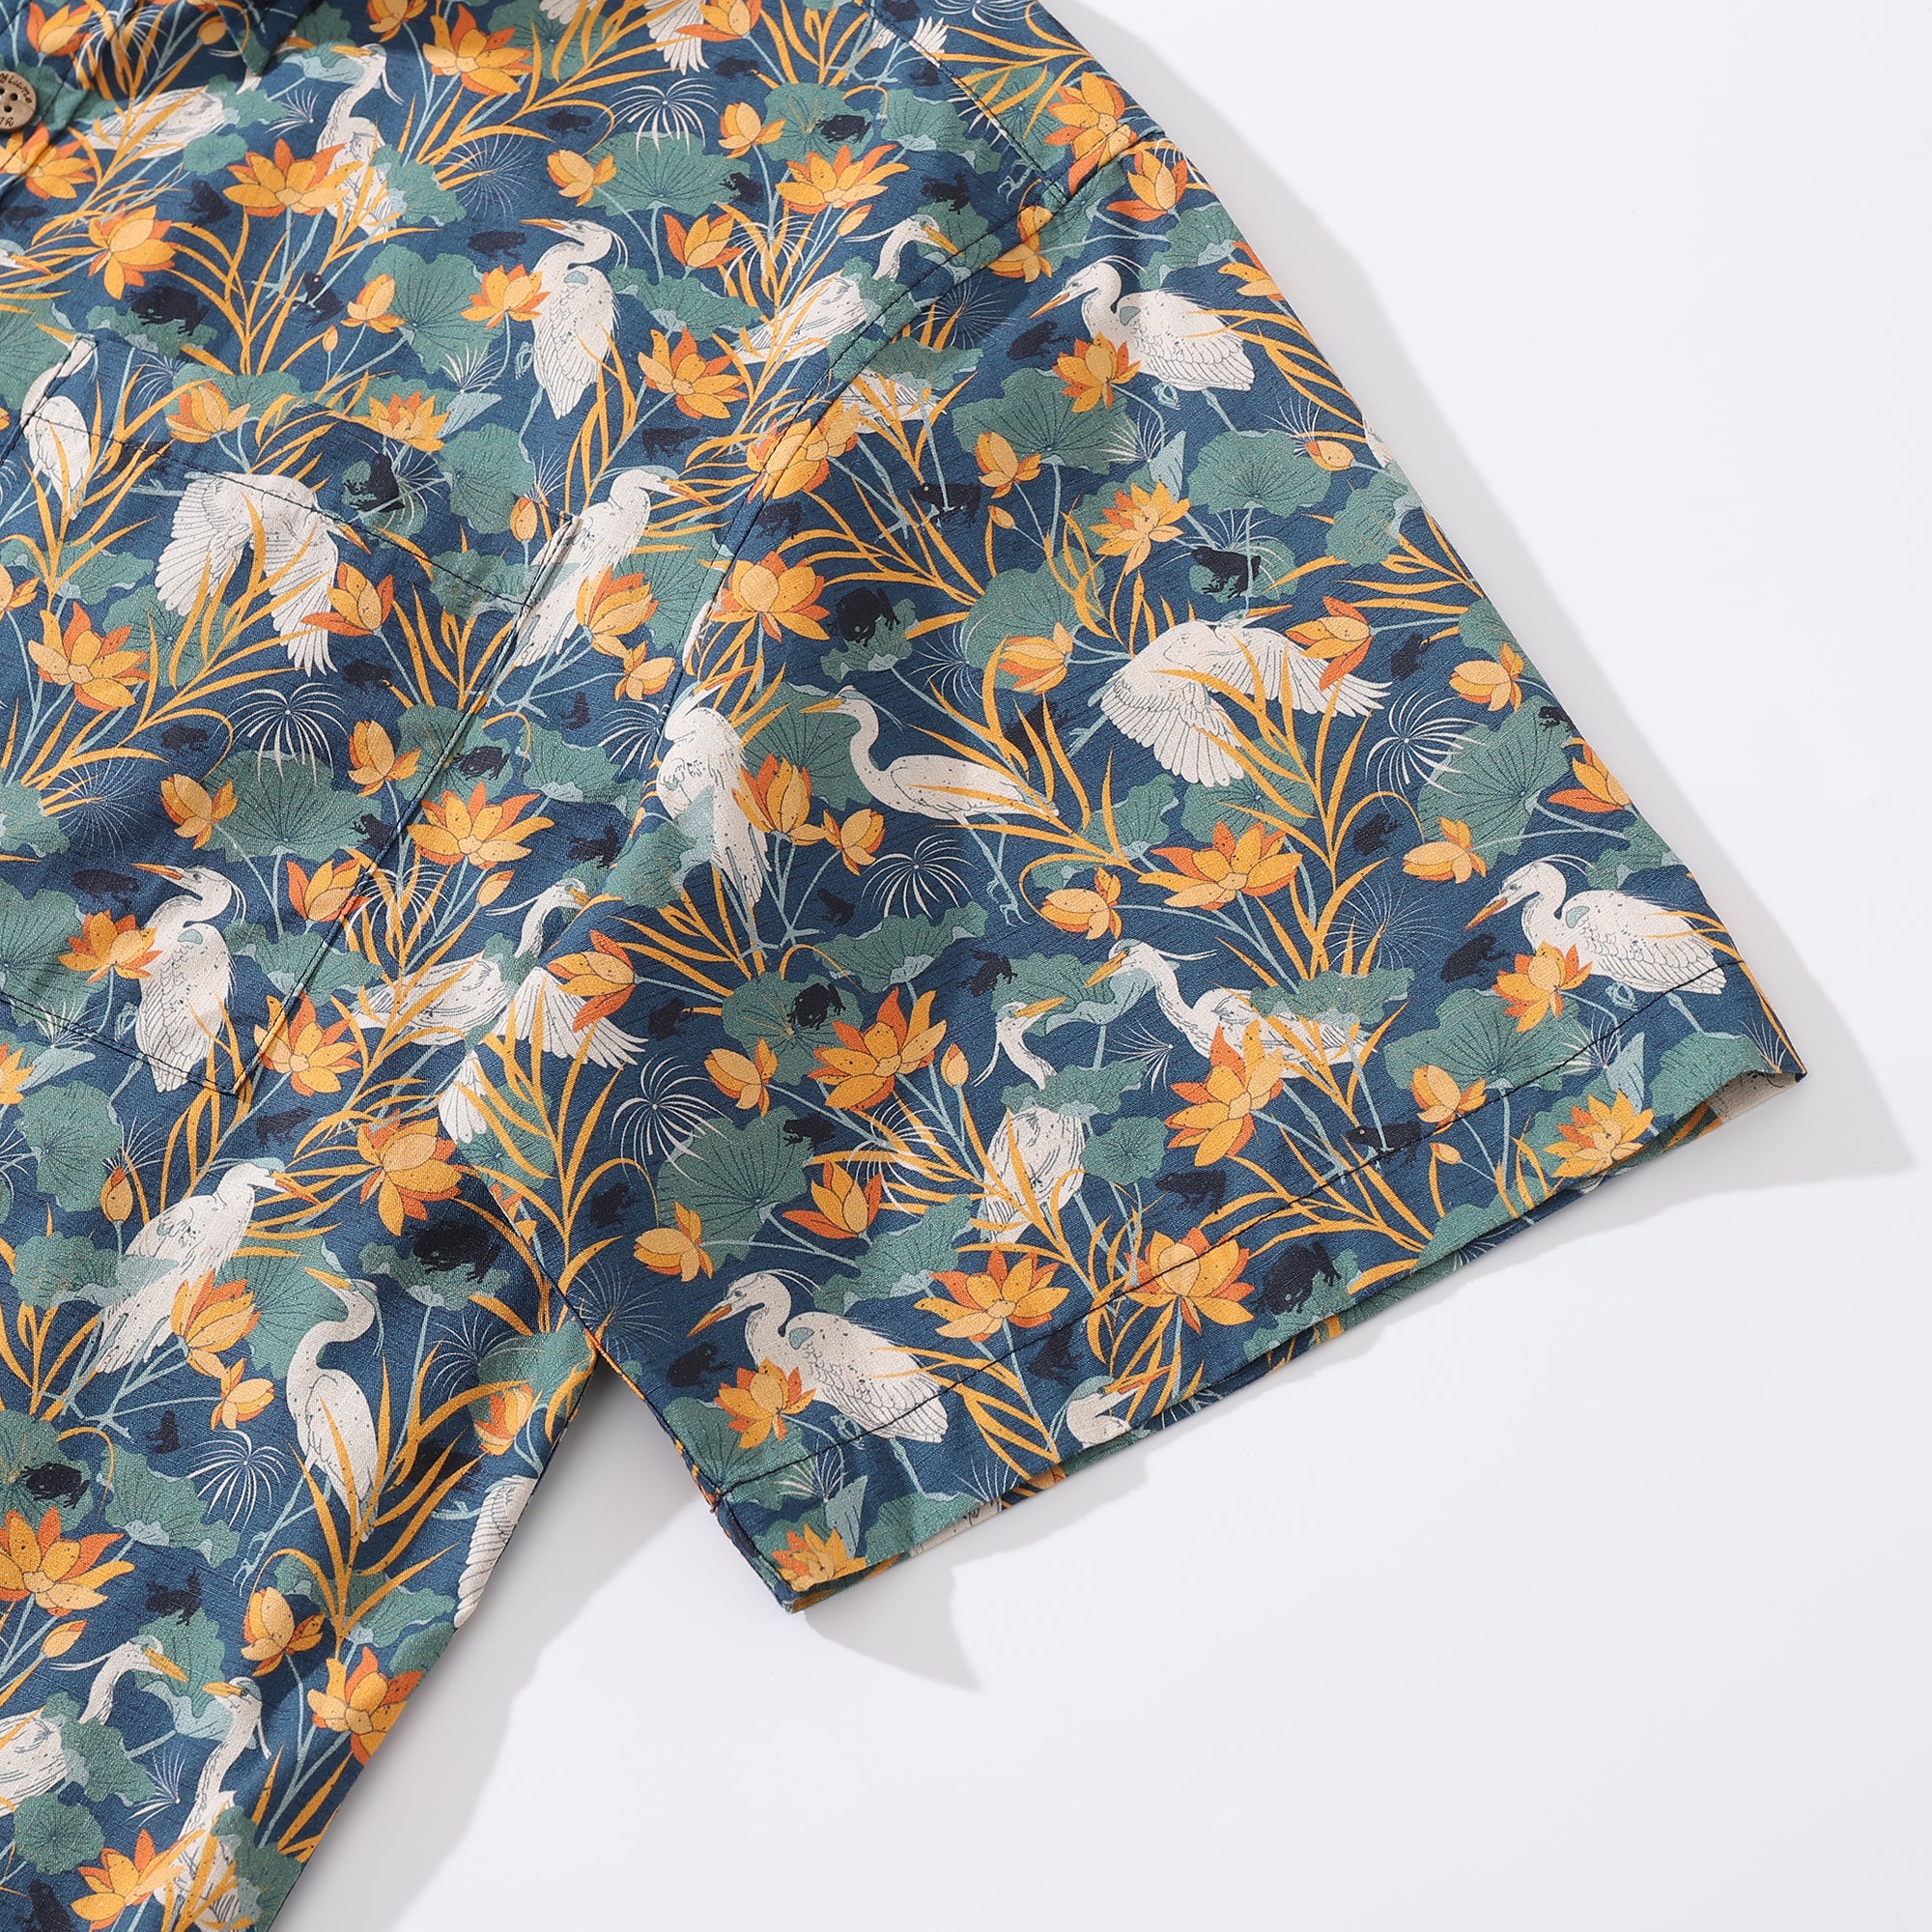 Men's Hawaiian Shirt By the pond By Cassandra O'Leary Cotton Button-down Short Sleeve Aloha Shirt